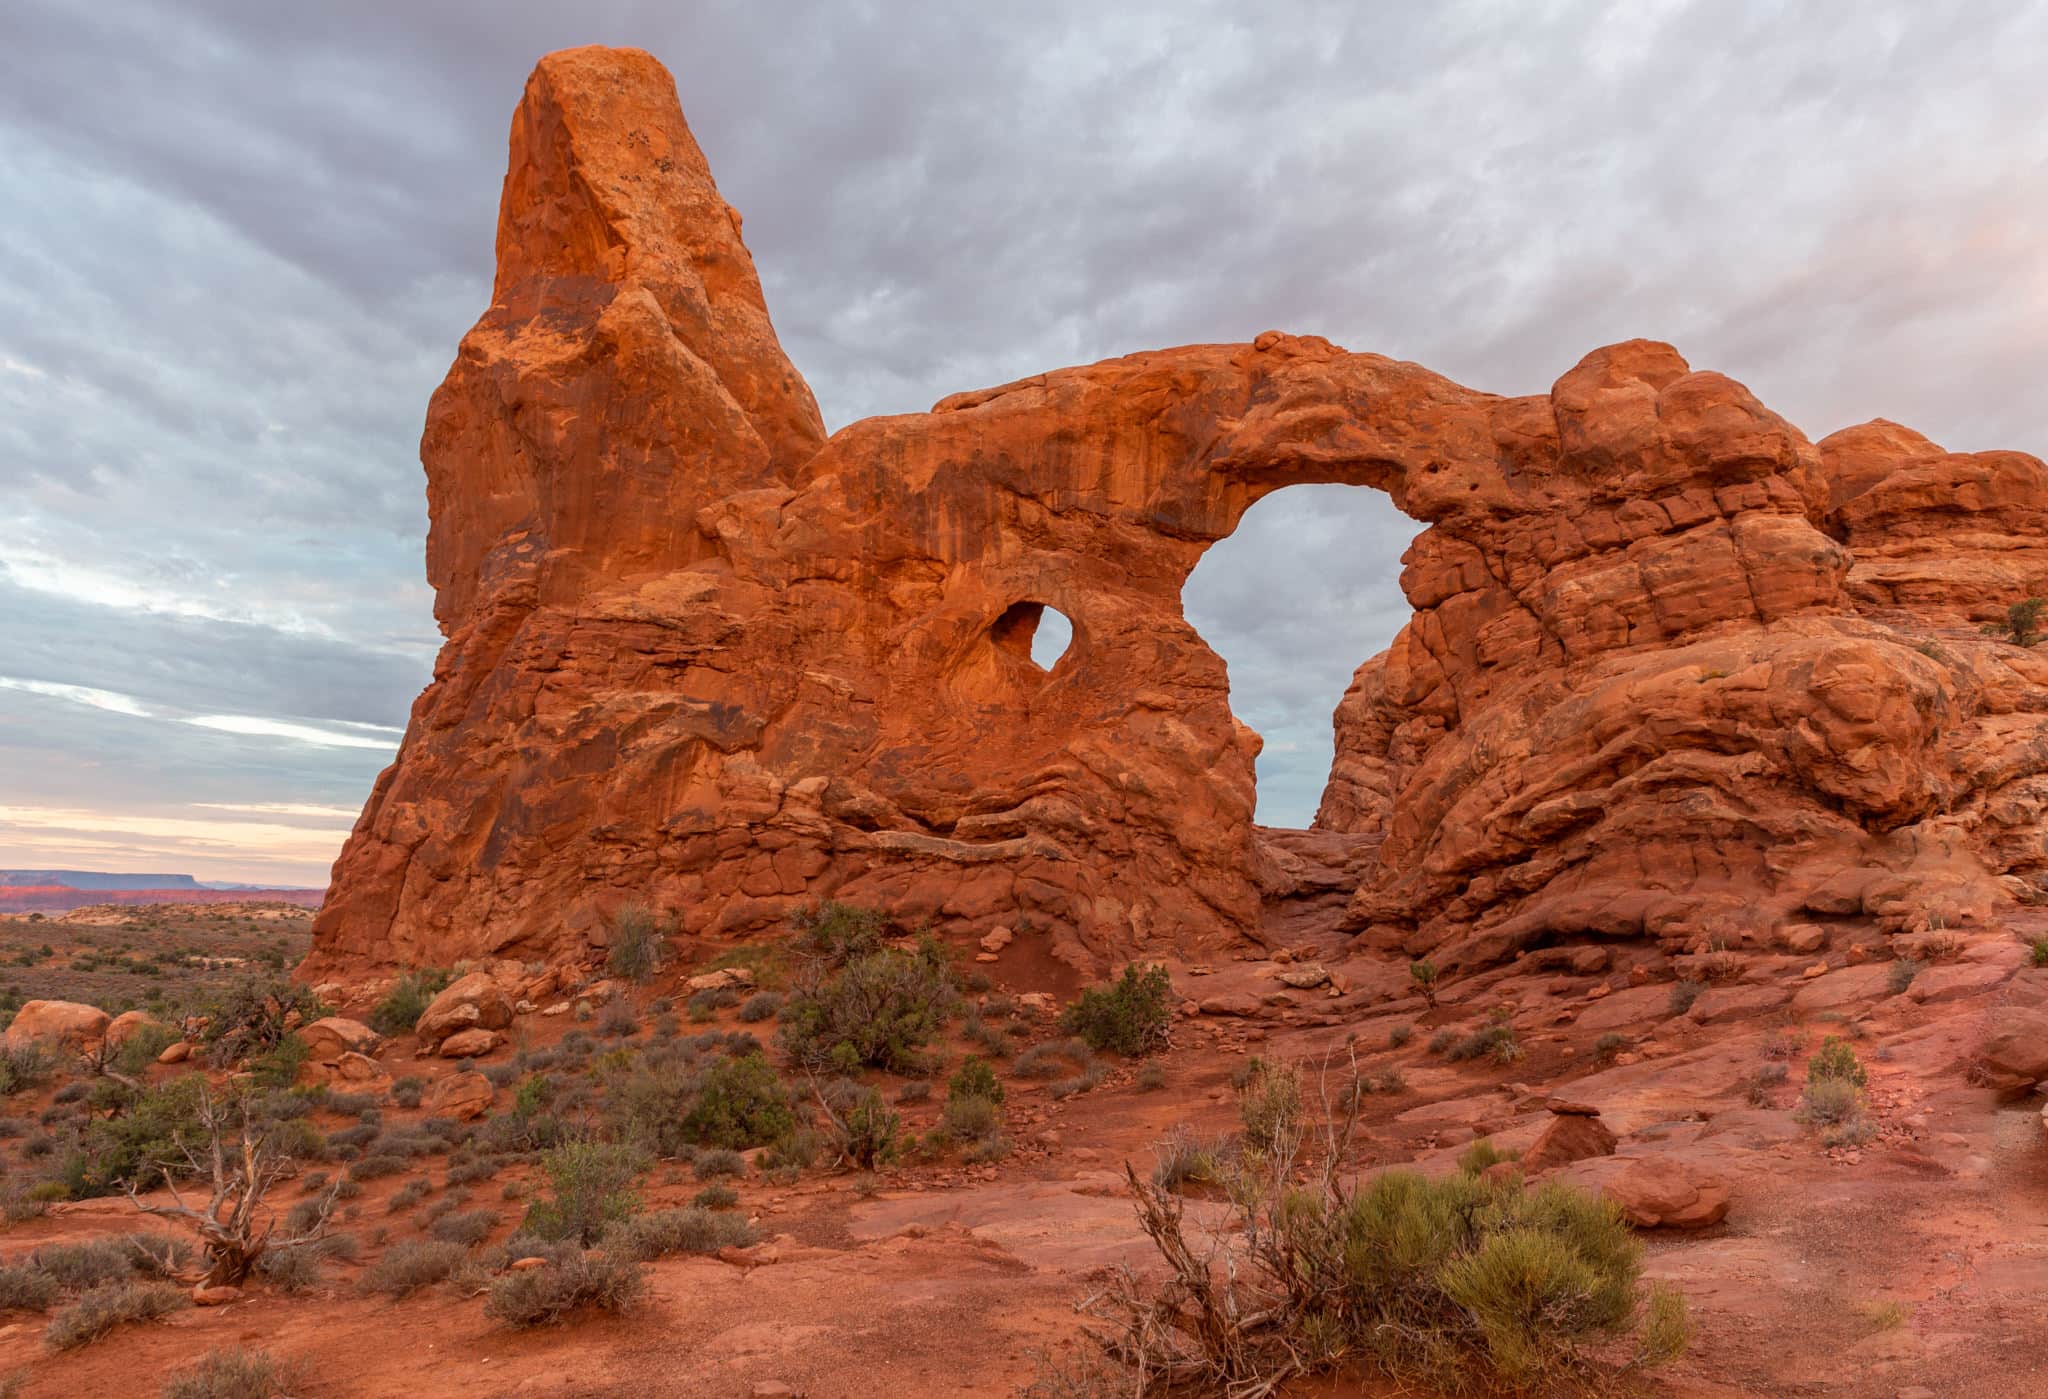 arches national park